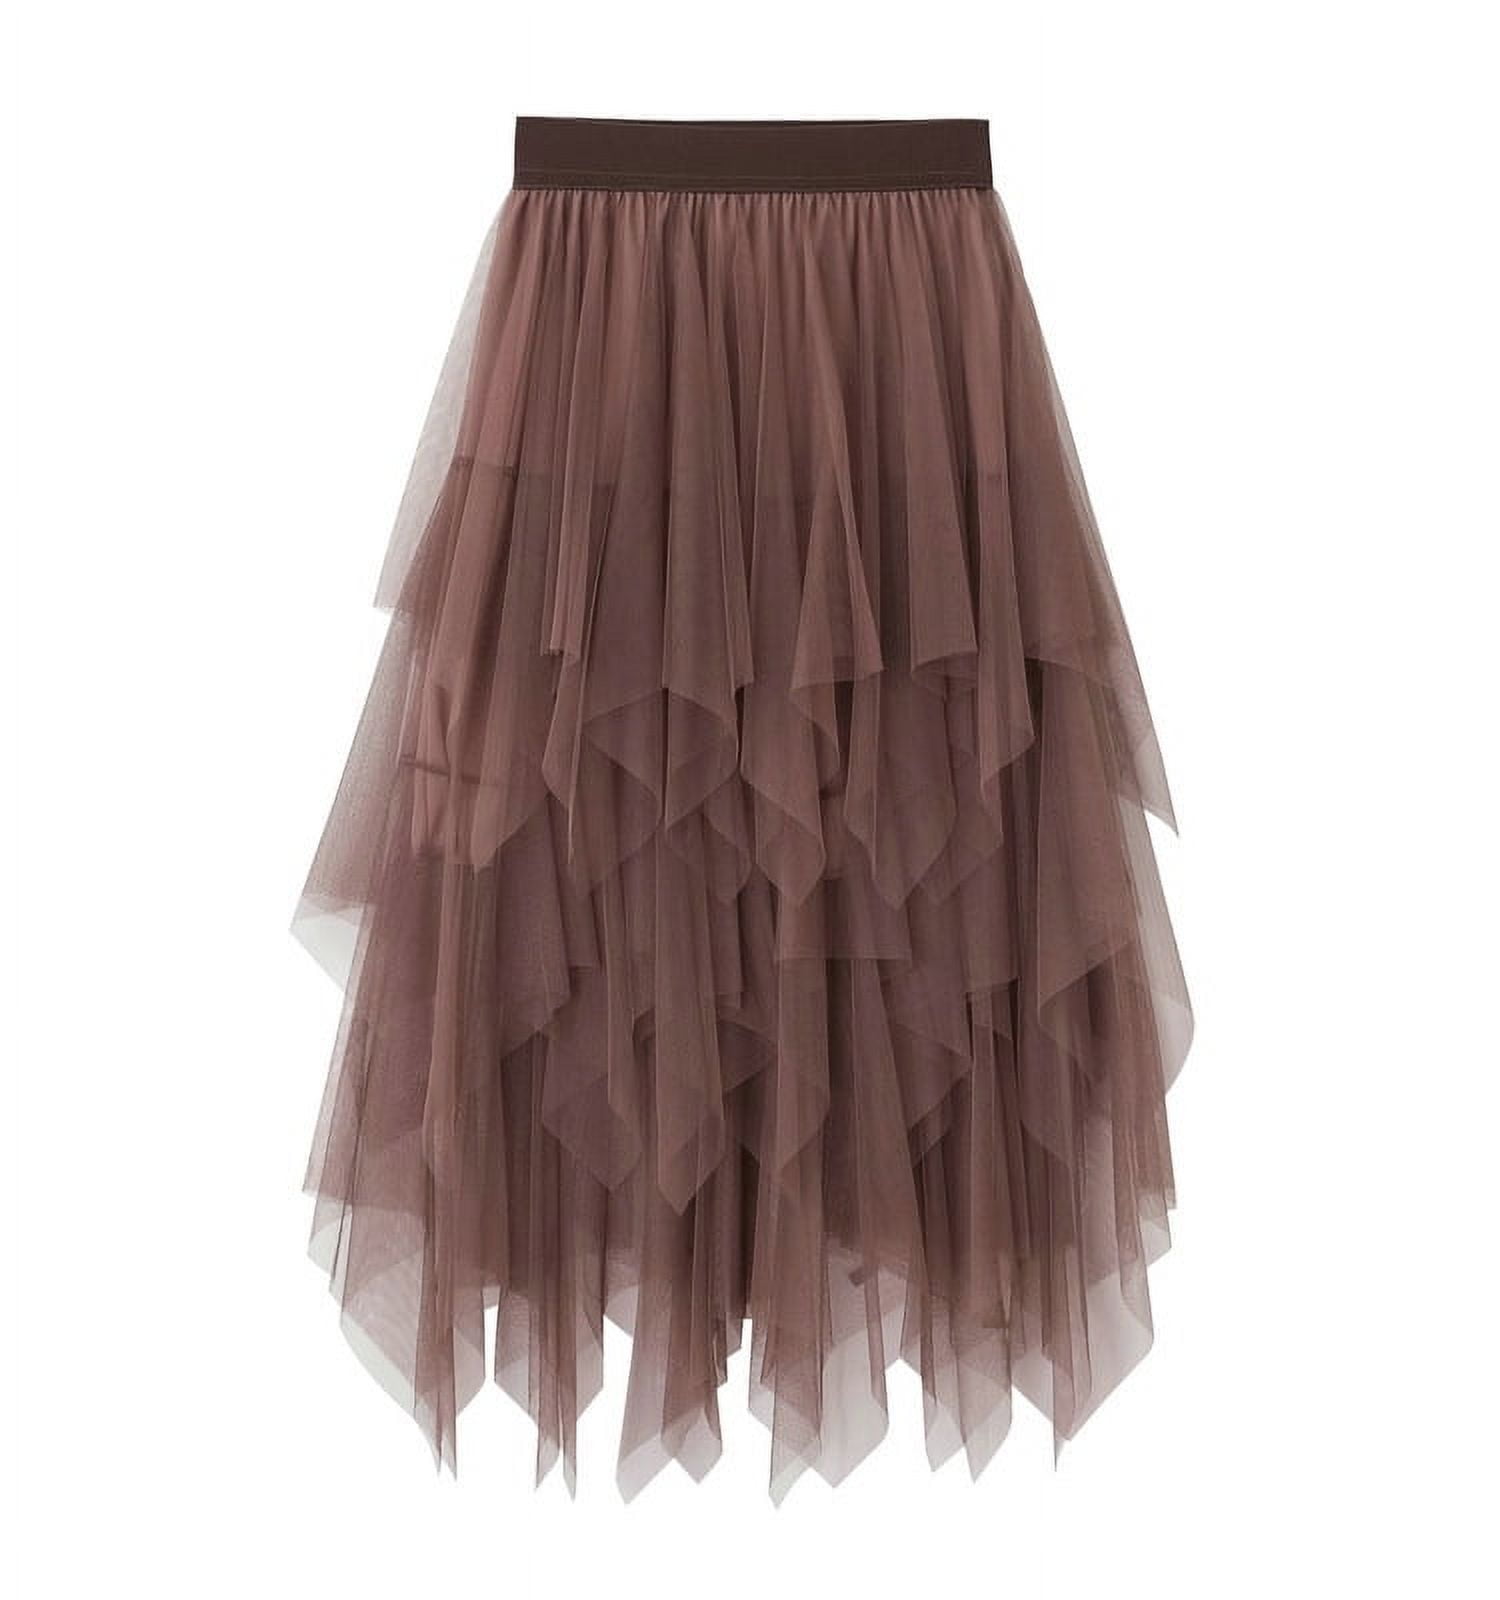 Qiylii Women's Fashionable Sexy Mesh Skirt, Irregular Elastic